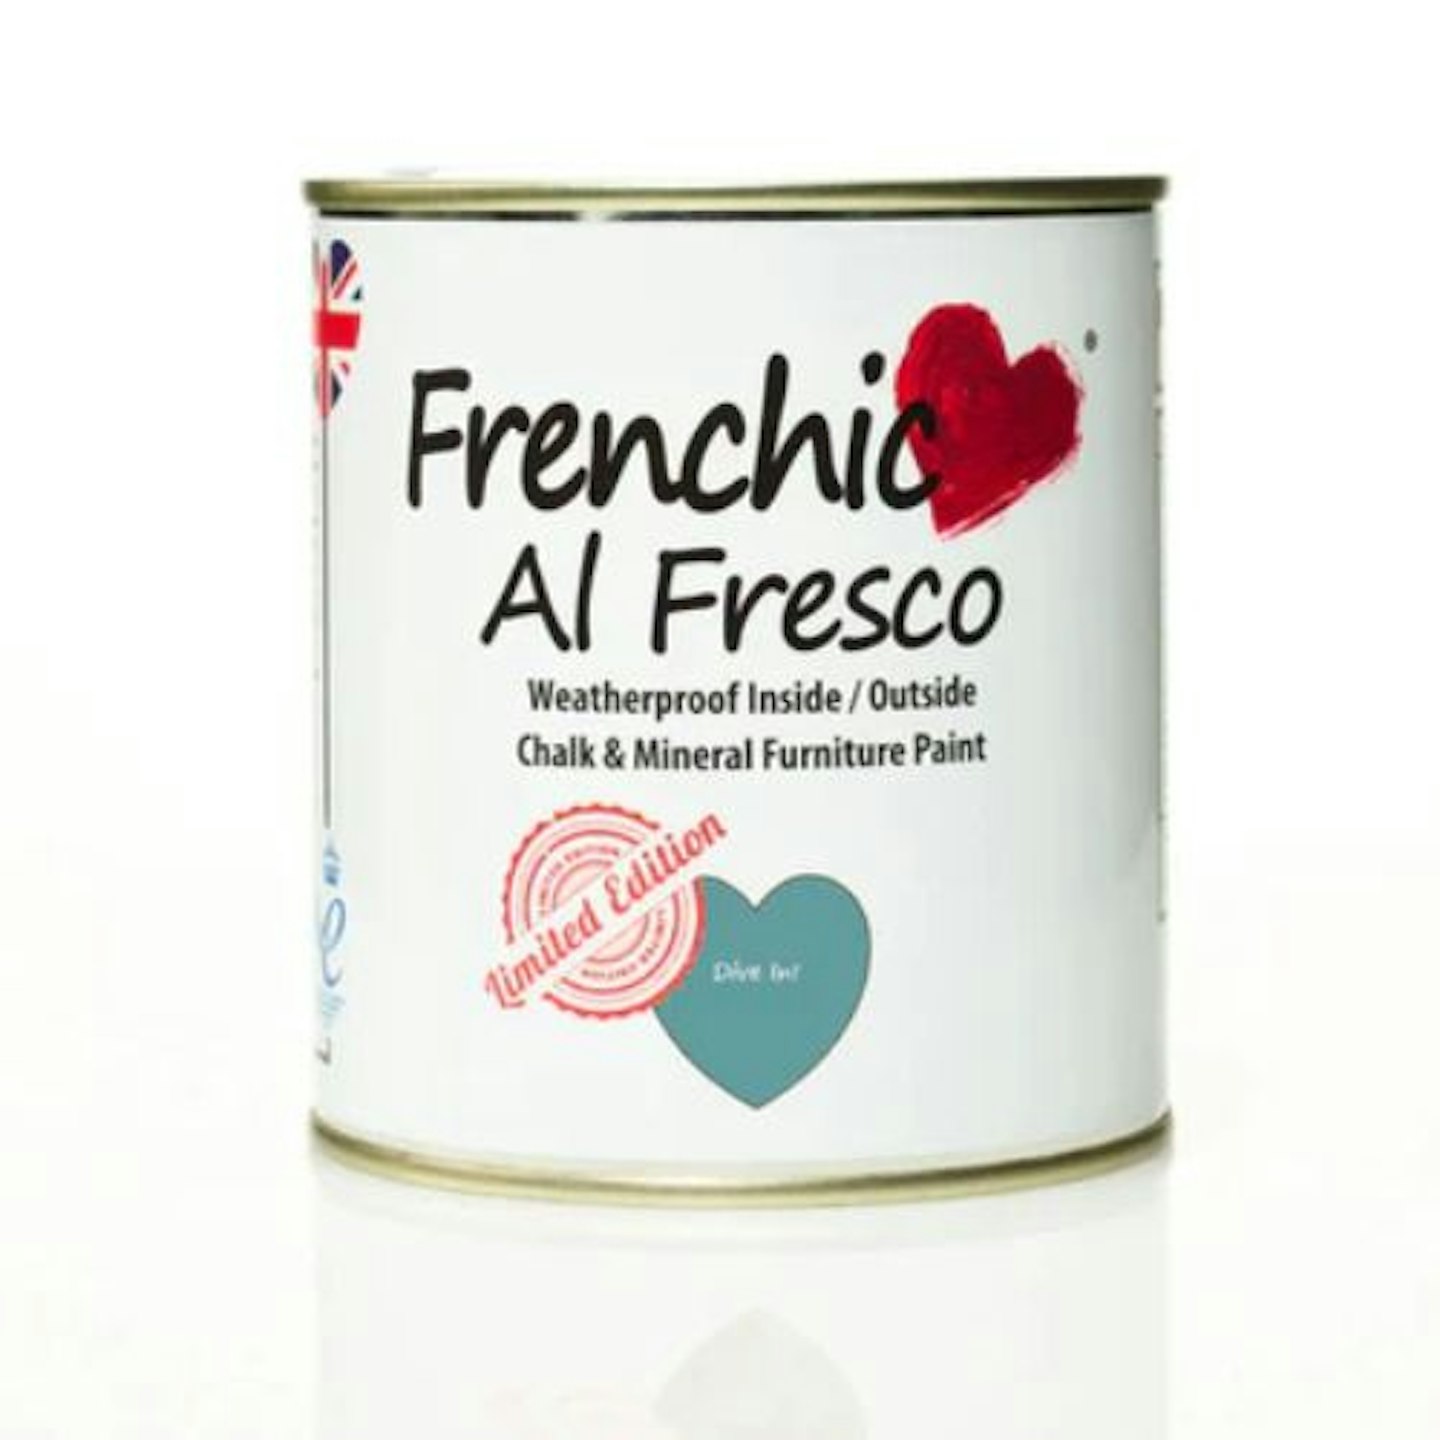 Frenchic Al Fresco paint